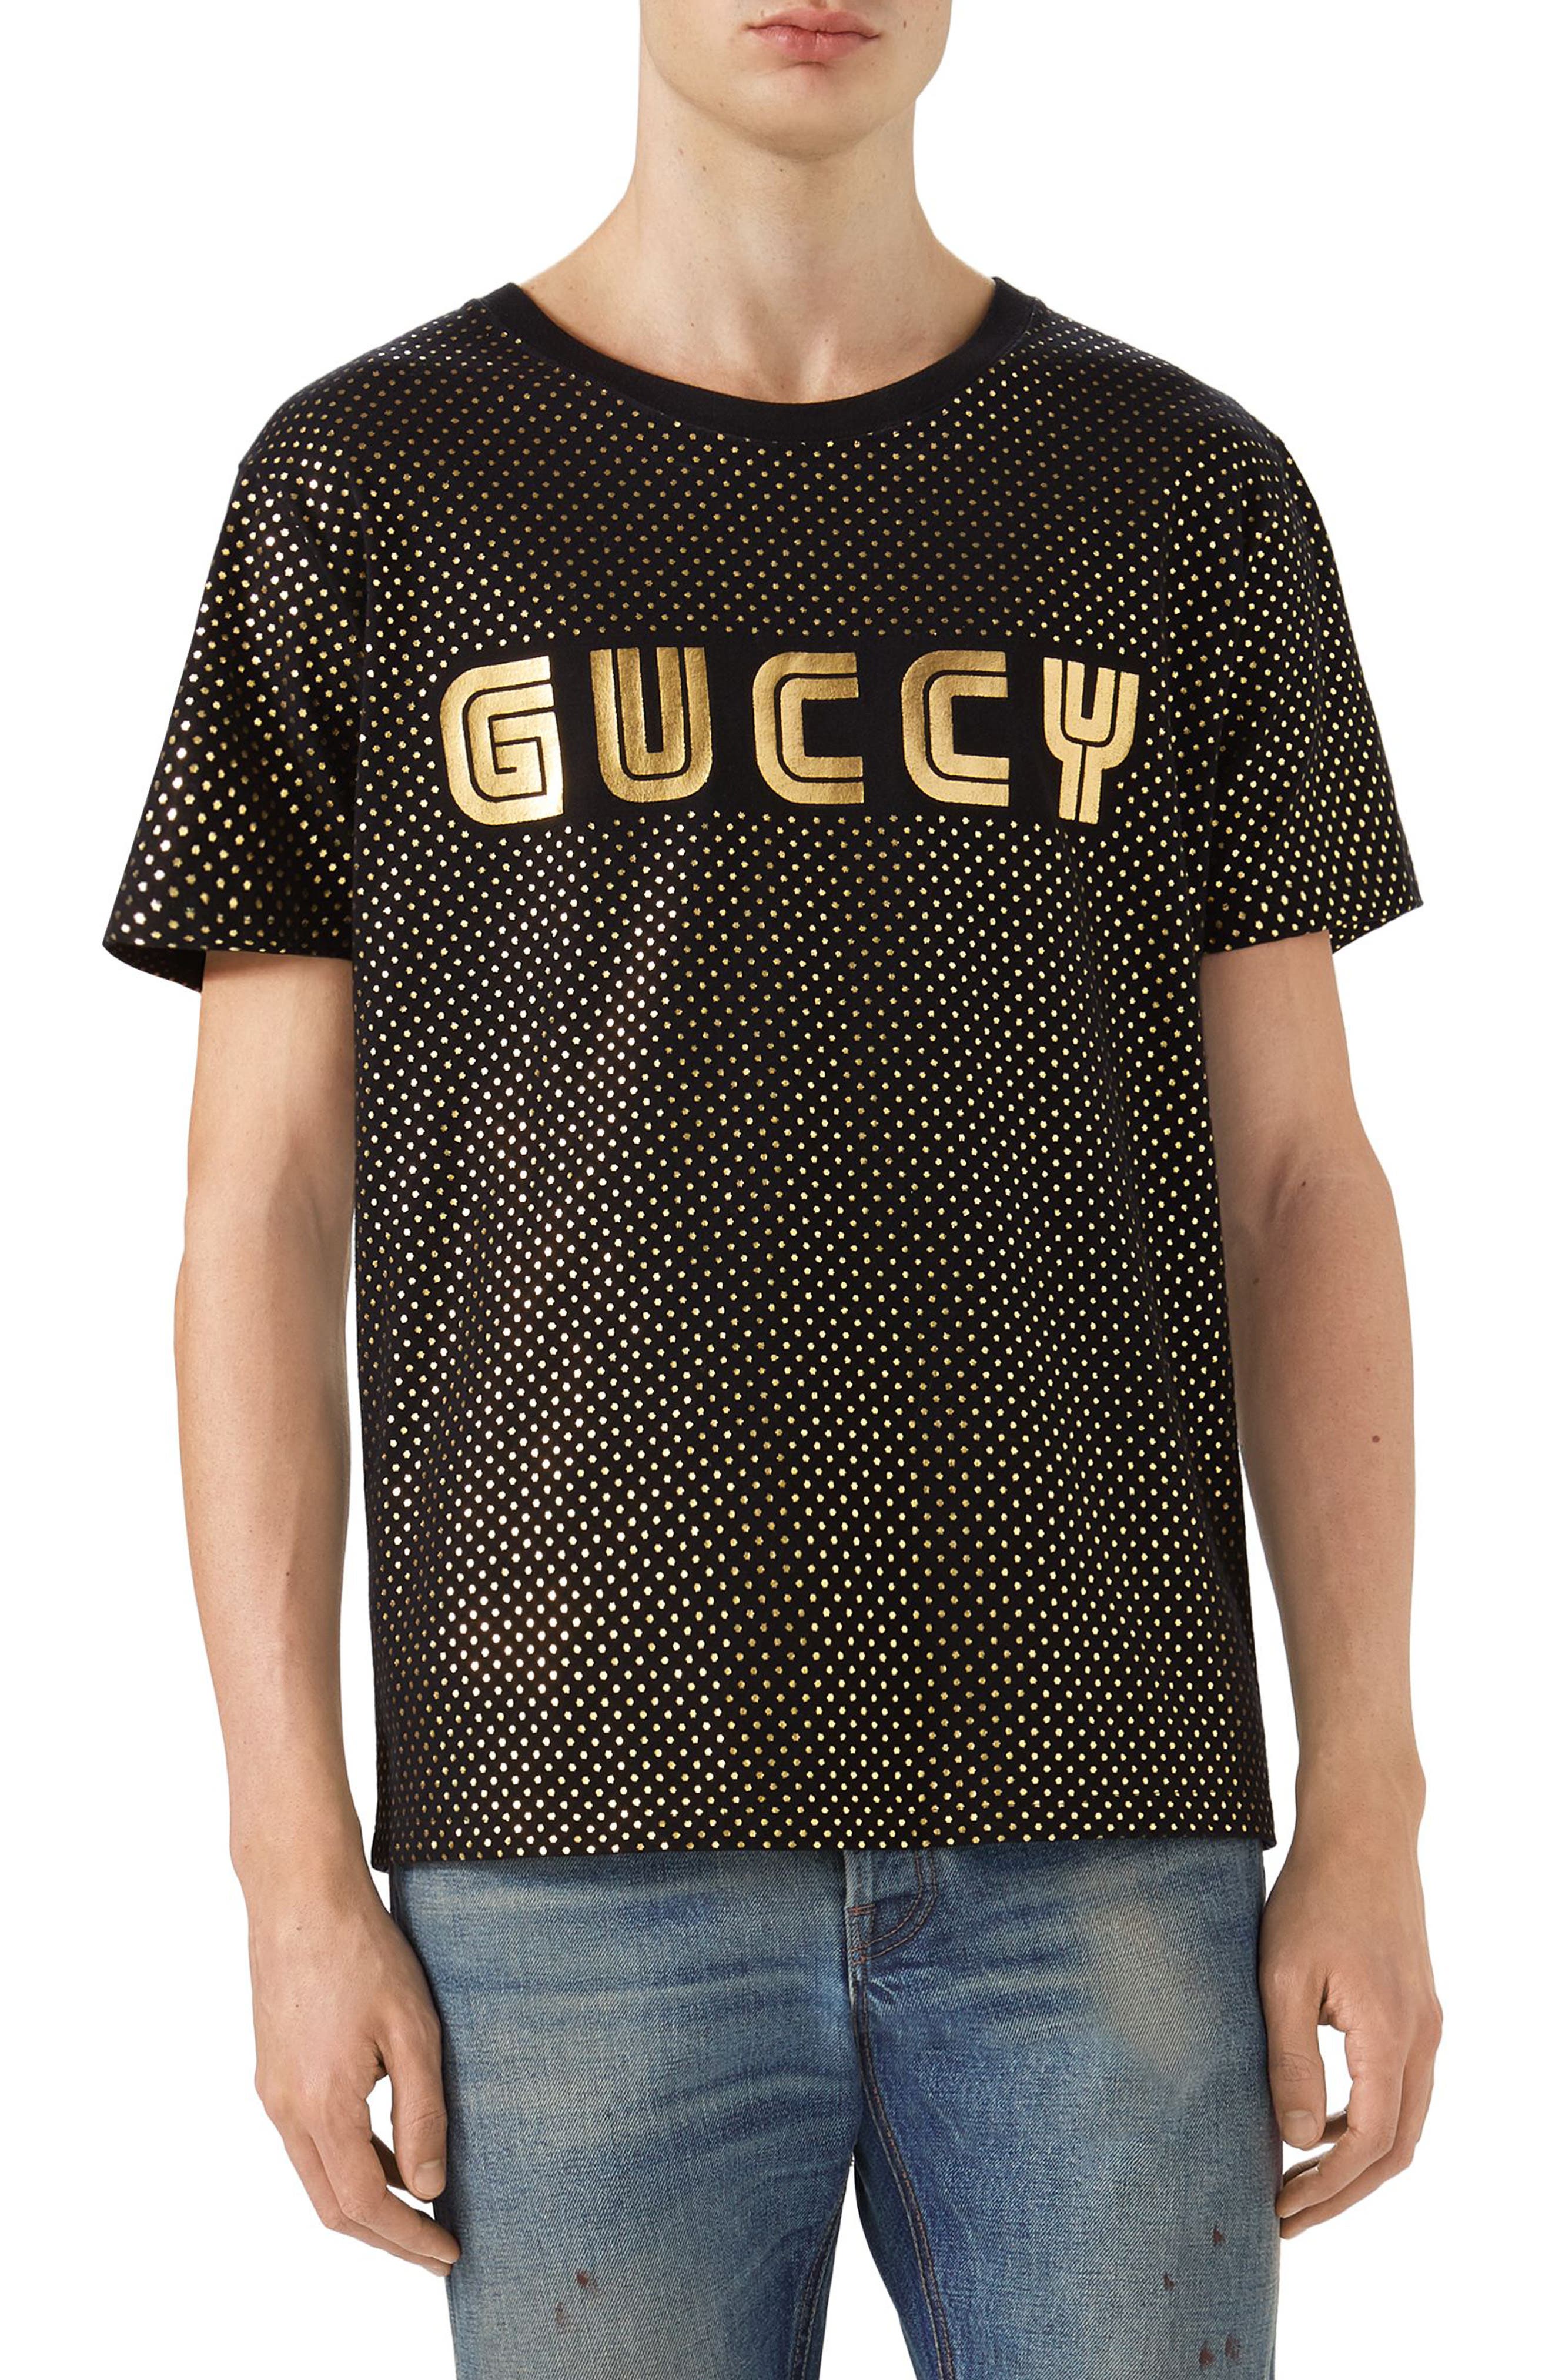 gucci shirt gold